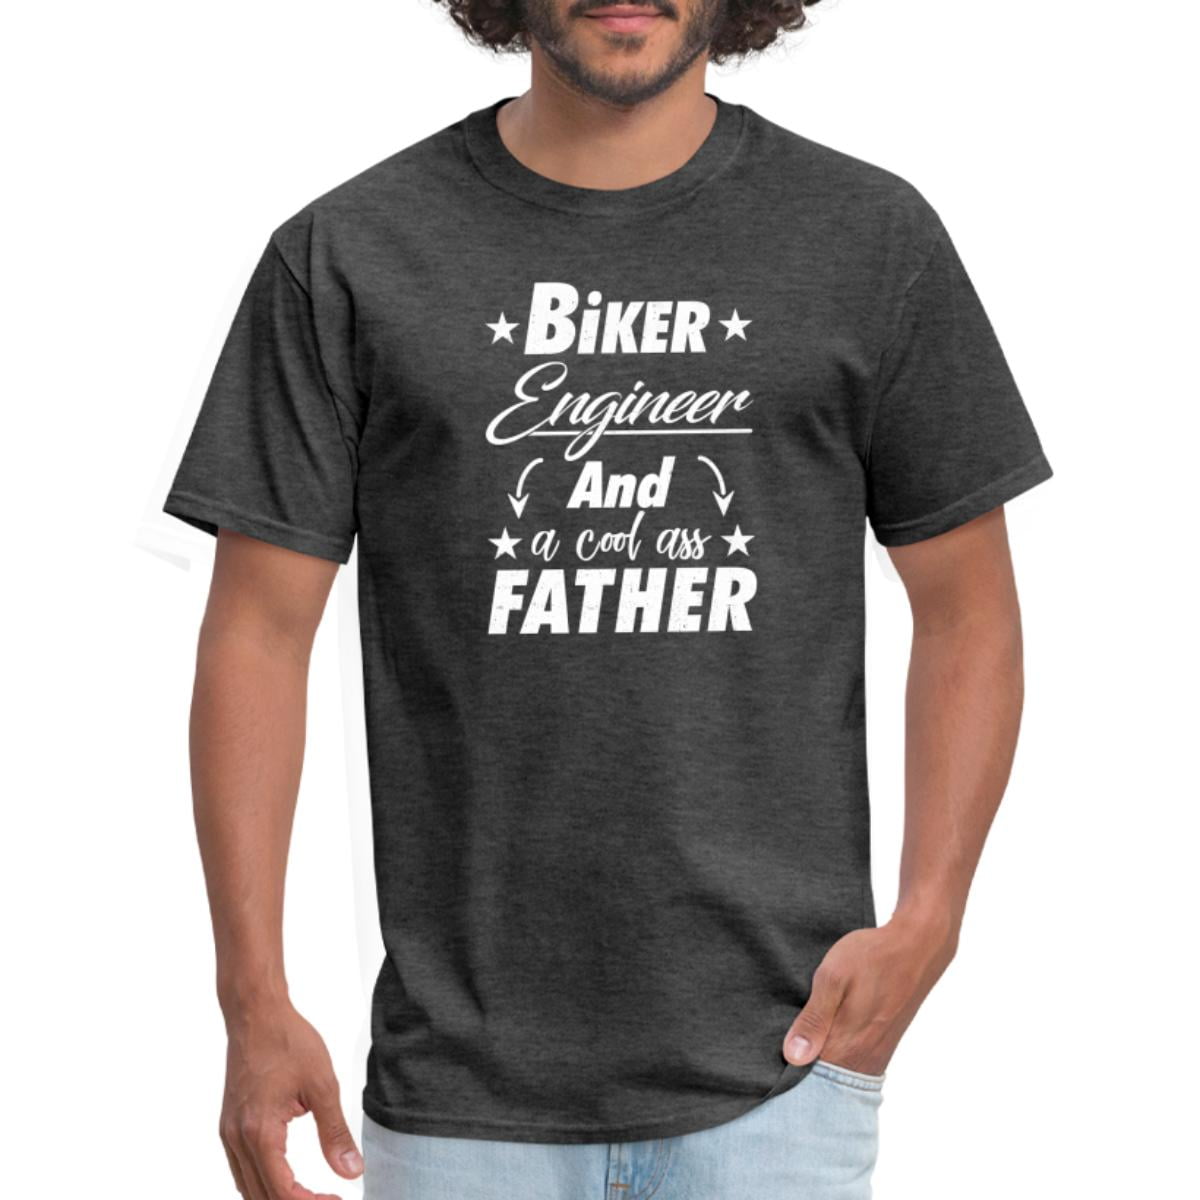 Biker Engineer Father Unisex Men's Classic T-Shirt - Walmart.com